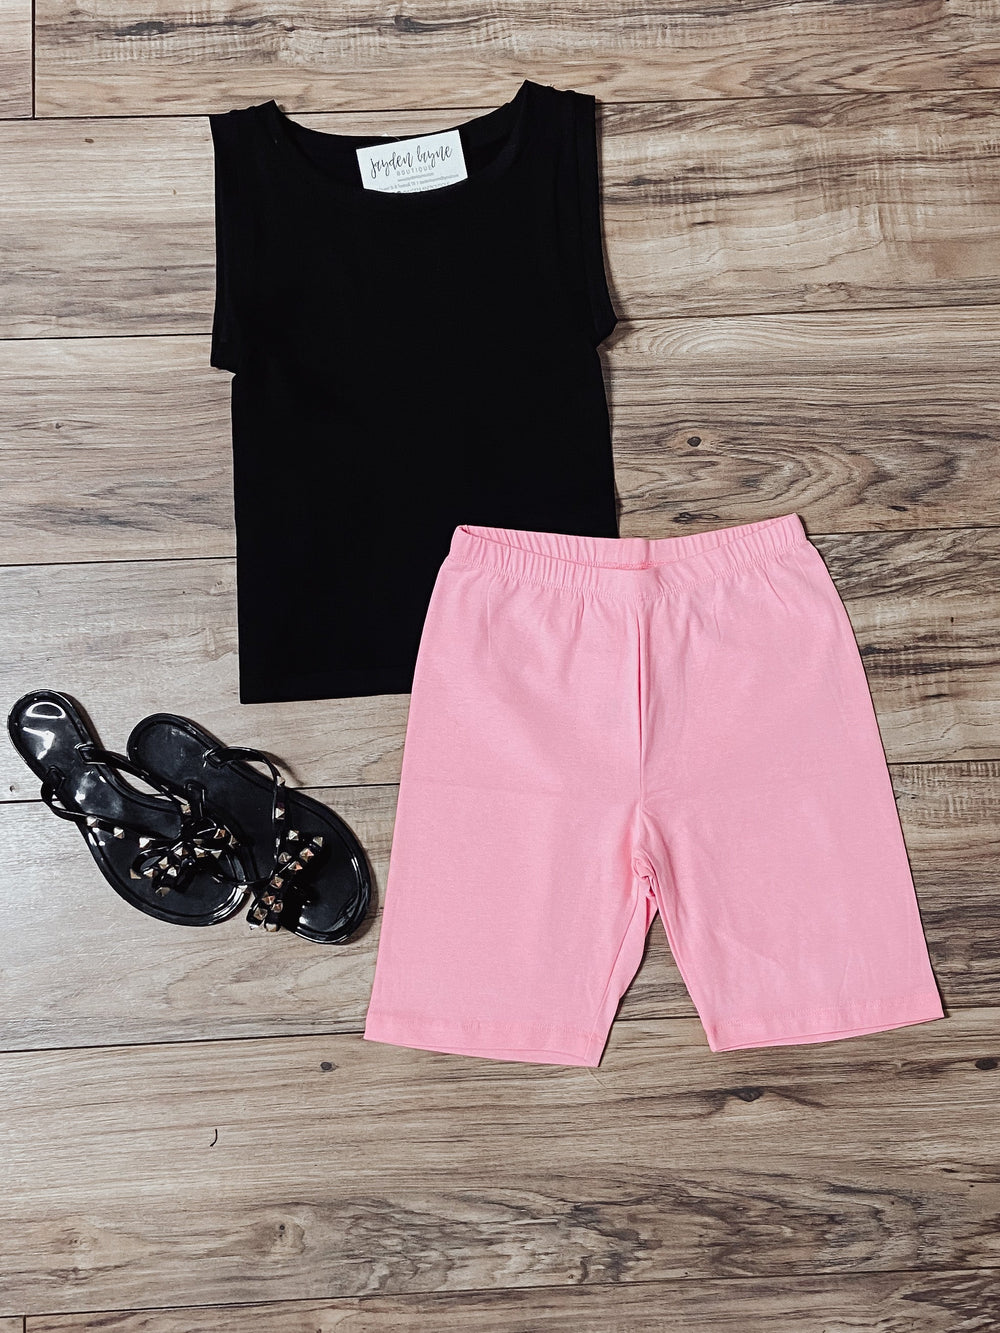 Hot Pink Bike shorts - Jayden Layne